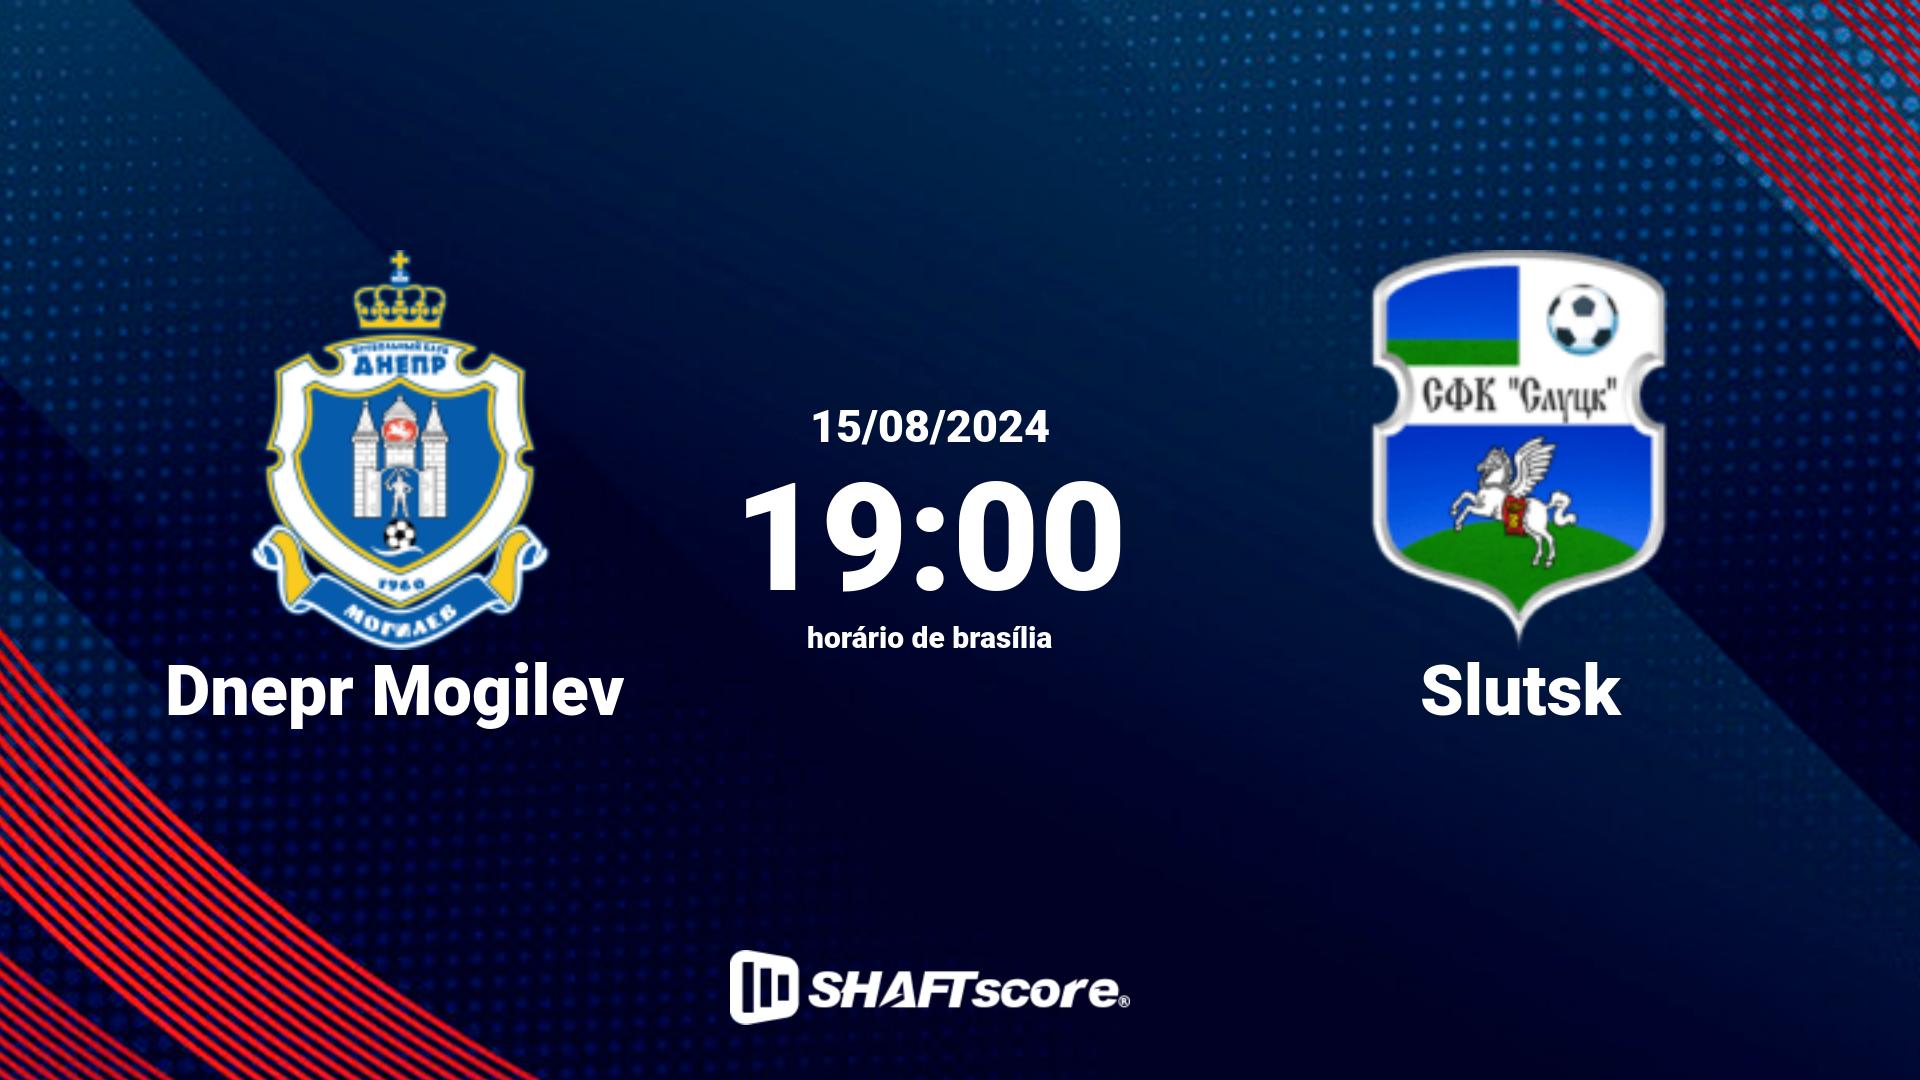 Estatísticas do jogo Dnepr Mogilev vs Slutsk 15.08 19:00